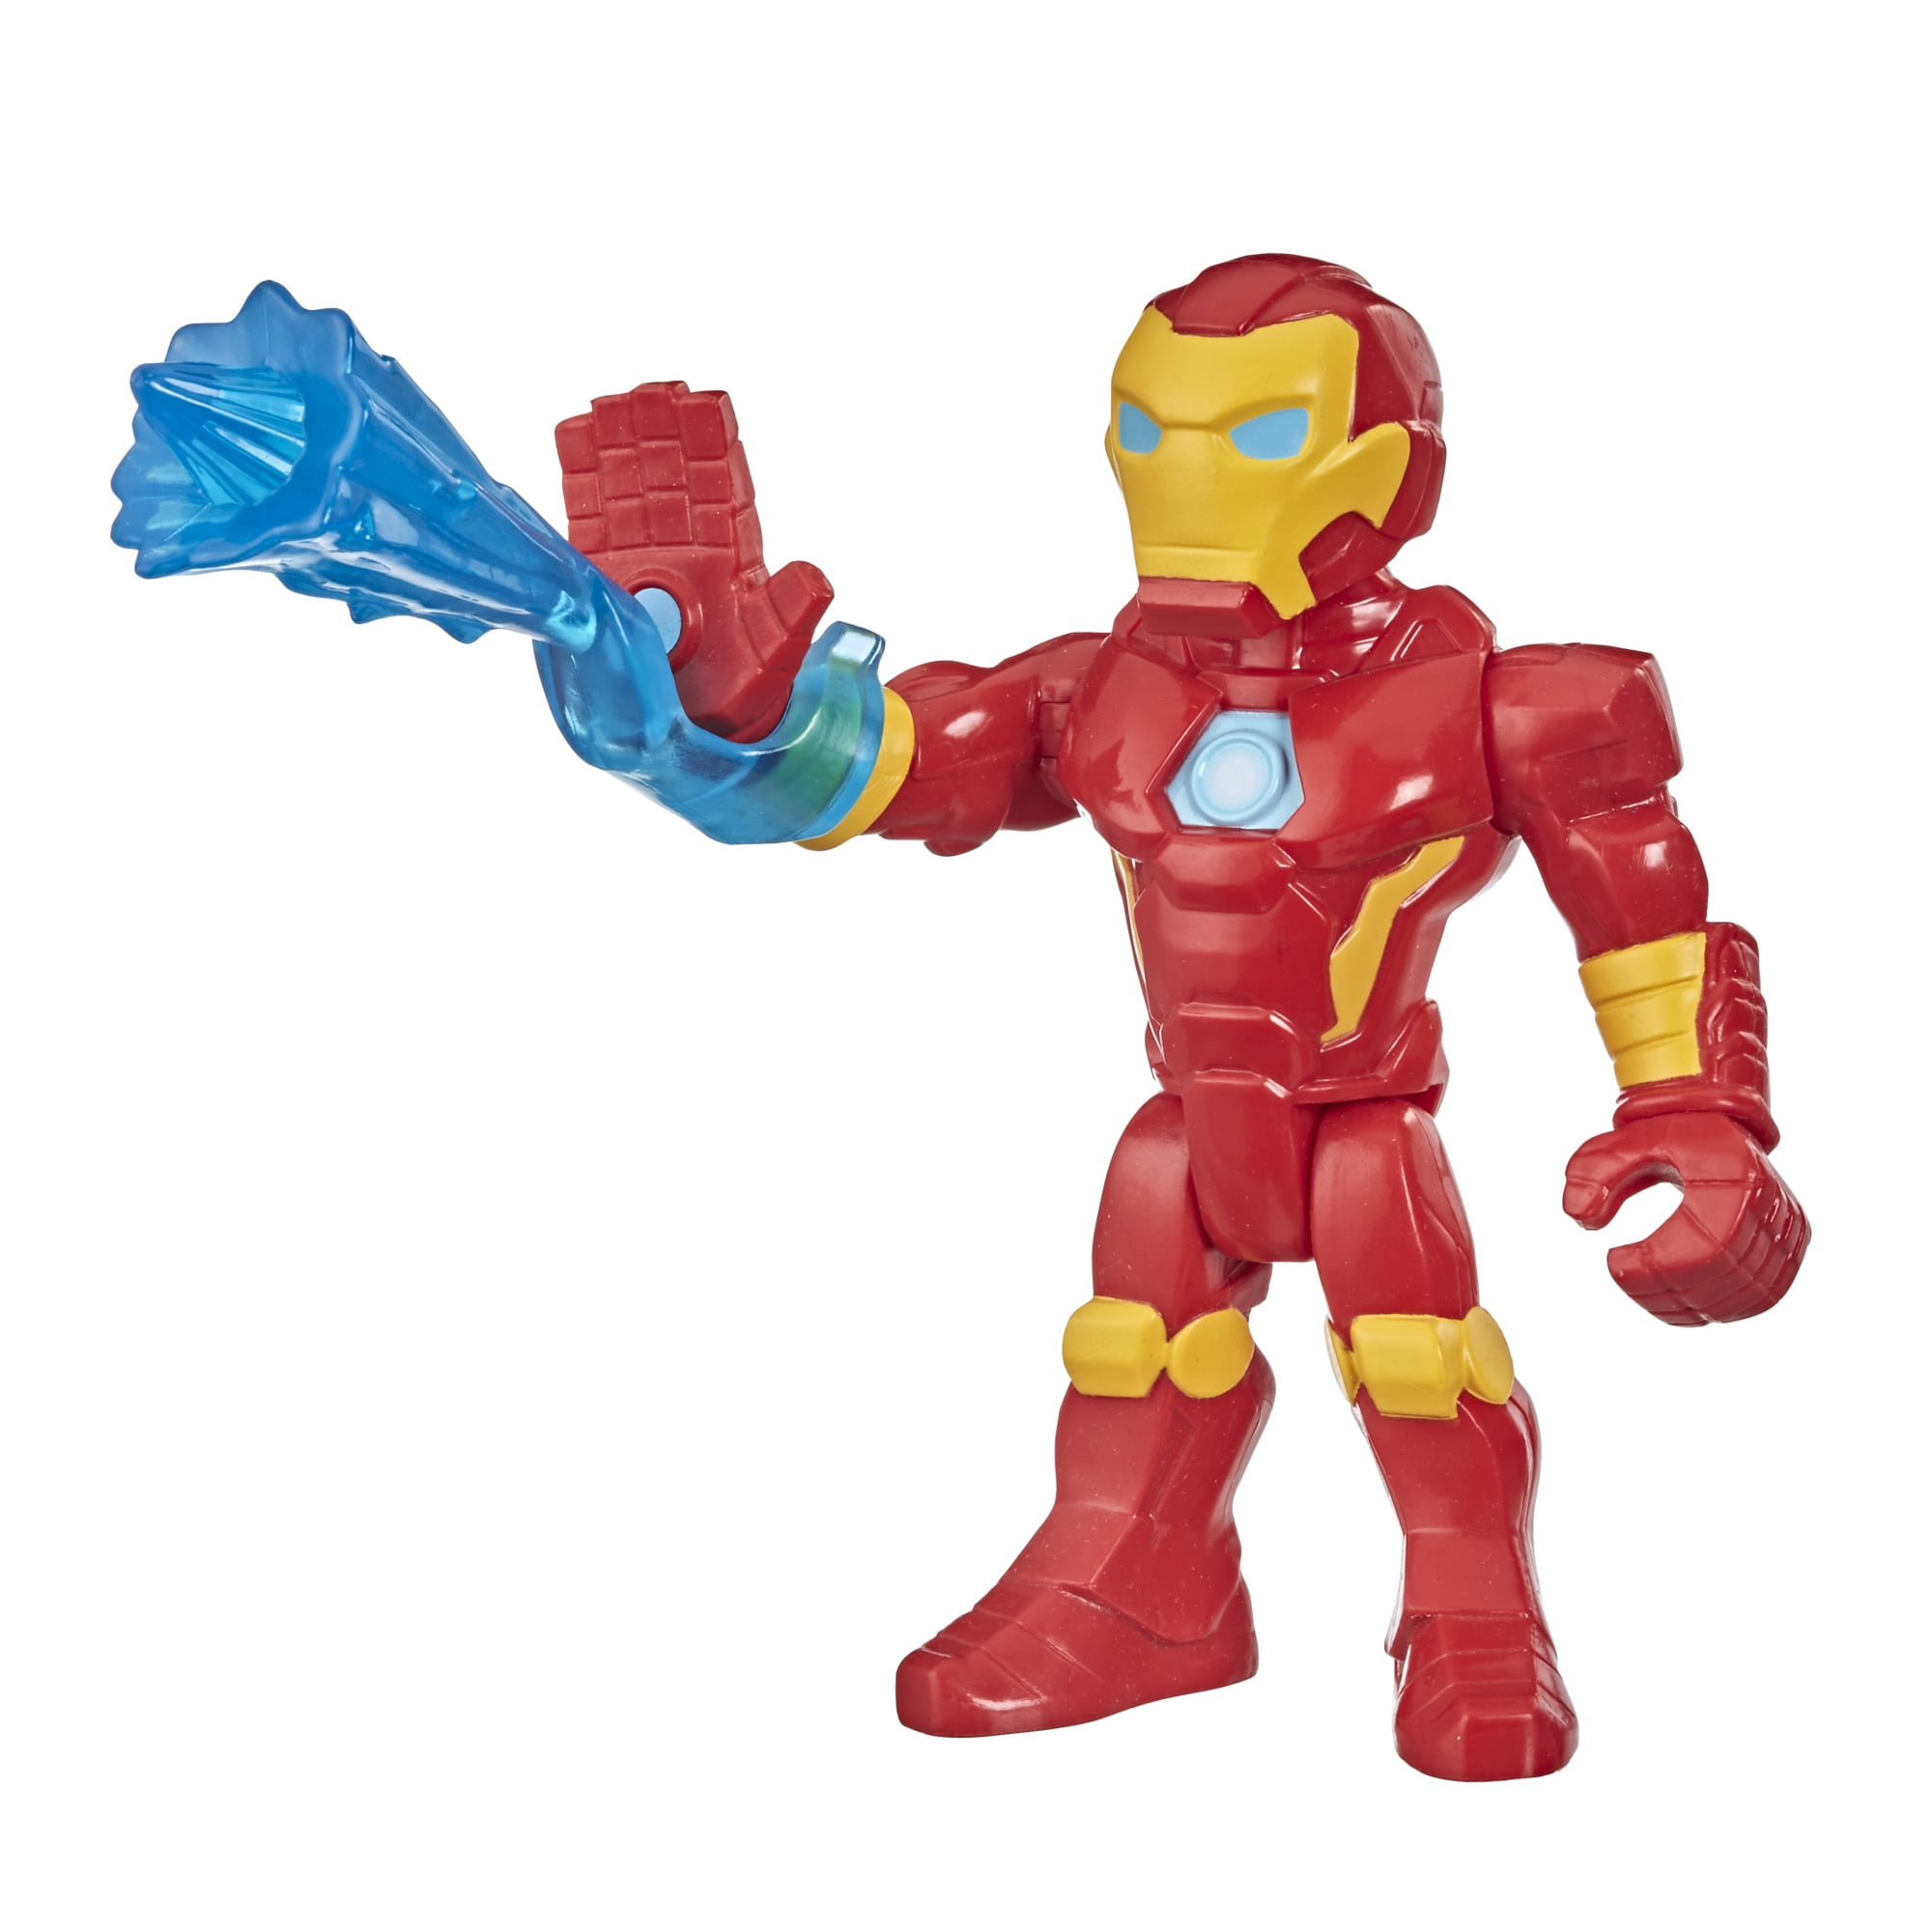 Ironman Iron Man Iron-Man sample promo trading card The Avengers Marvel Disney 